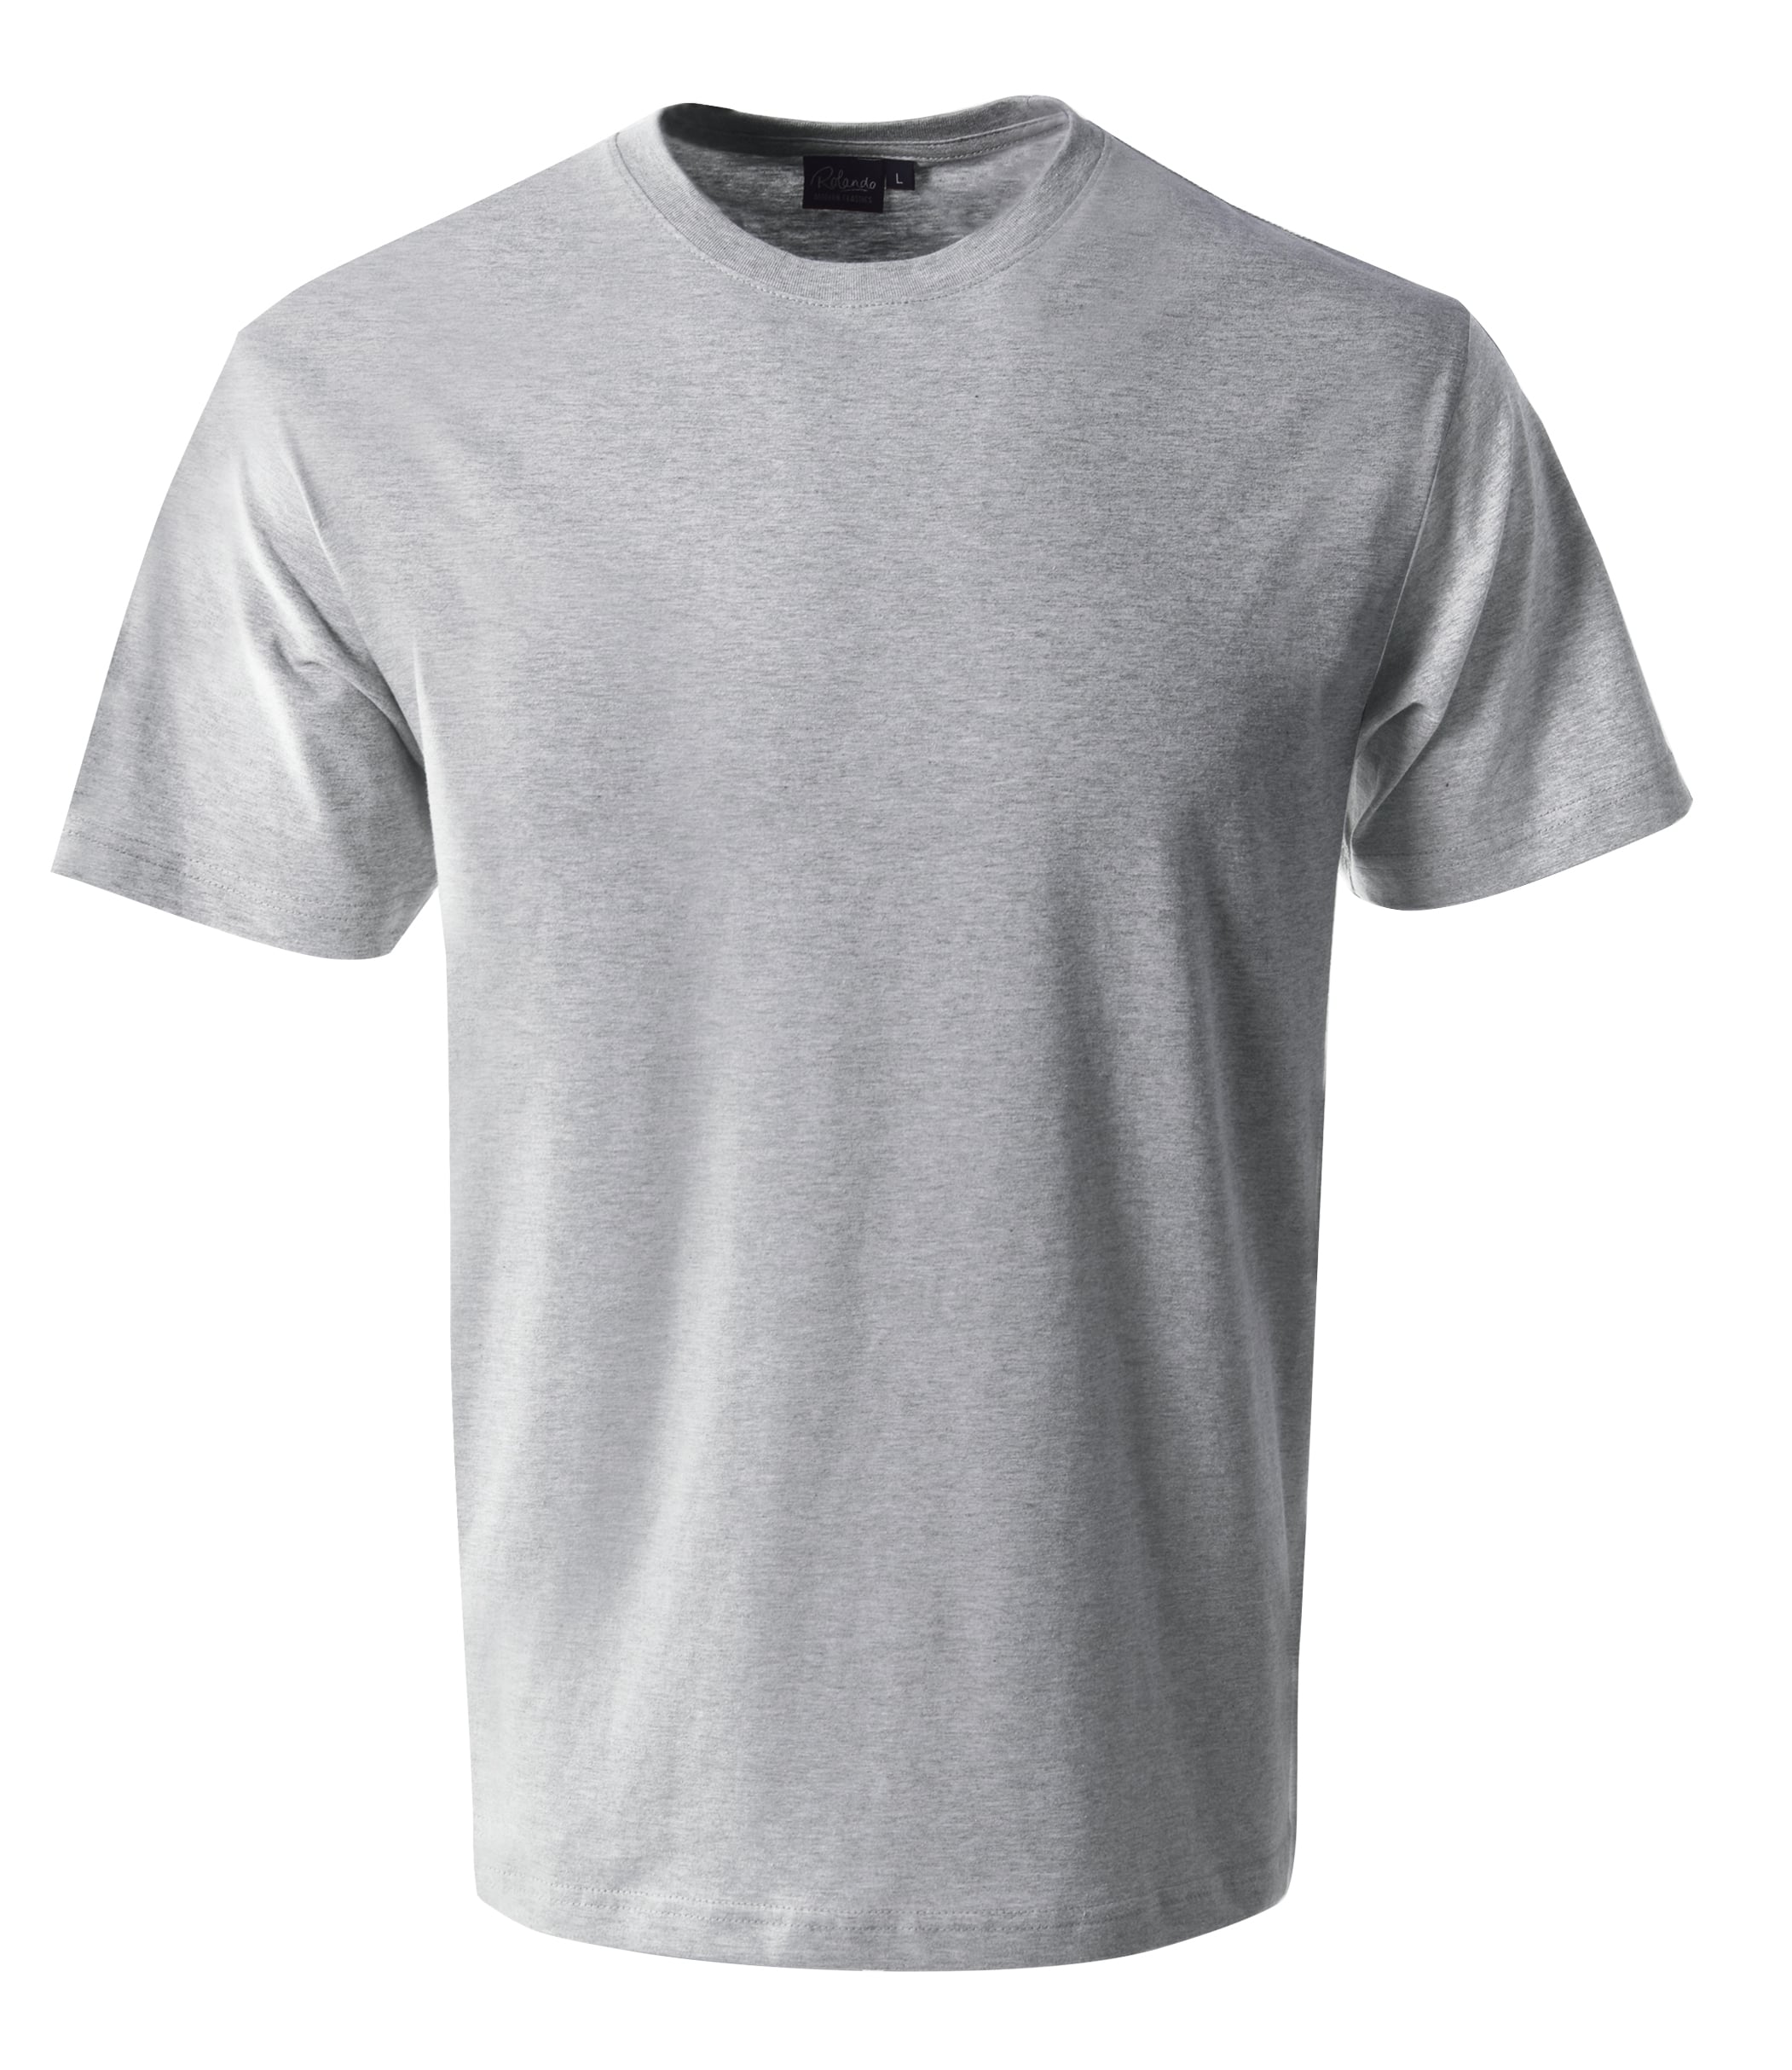 165G Crew Neck T-Shirt - Grey Melange 